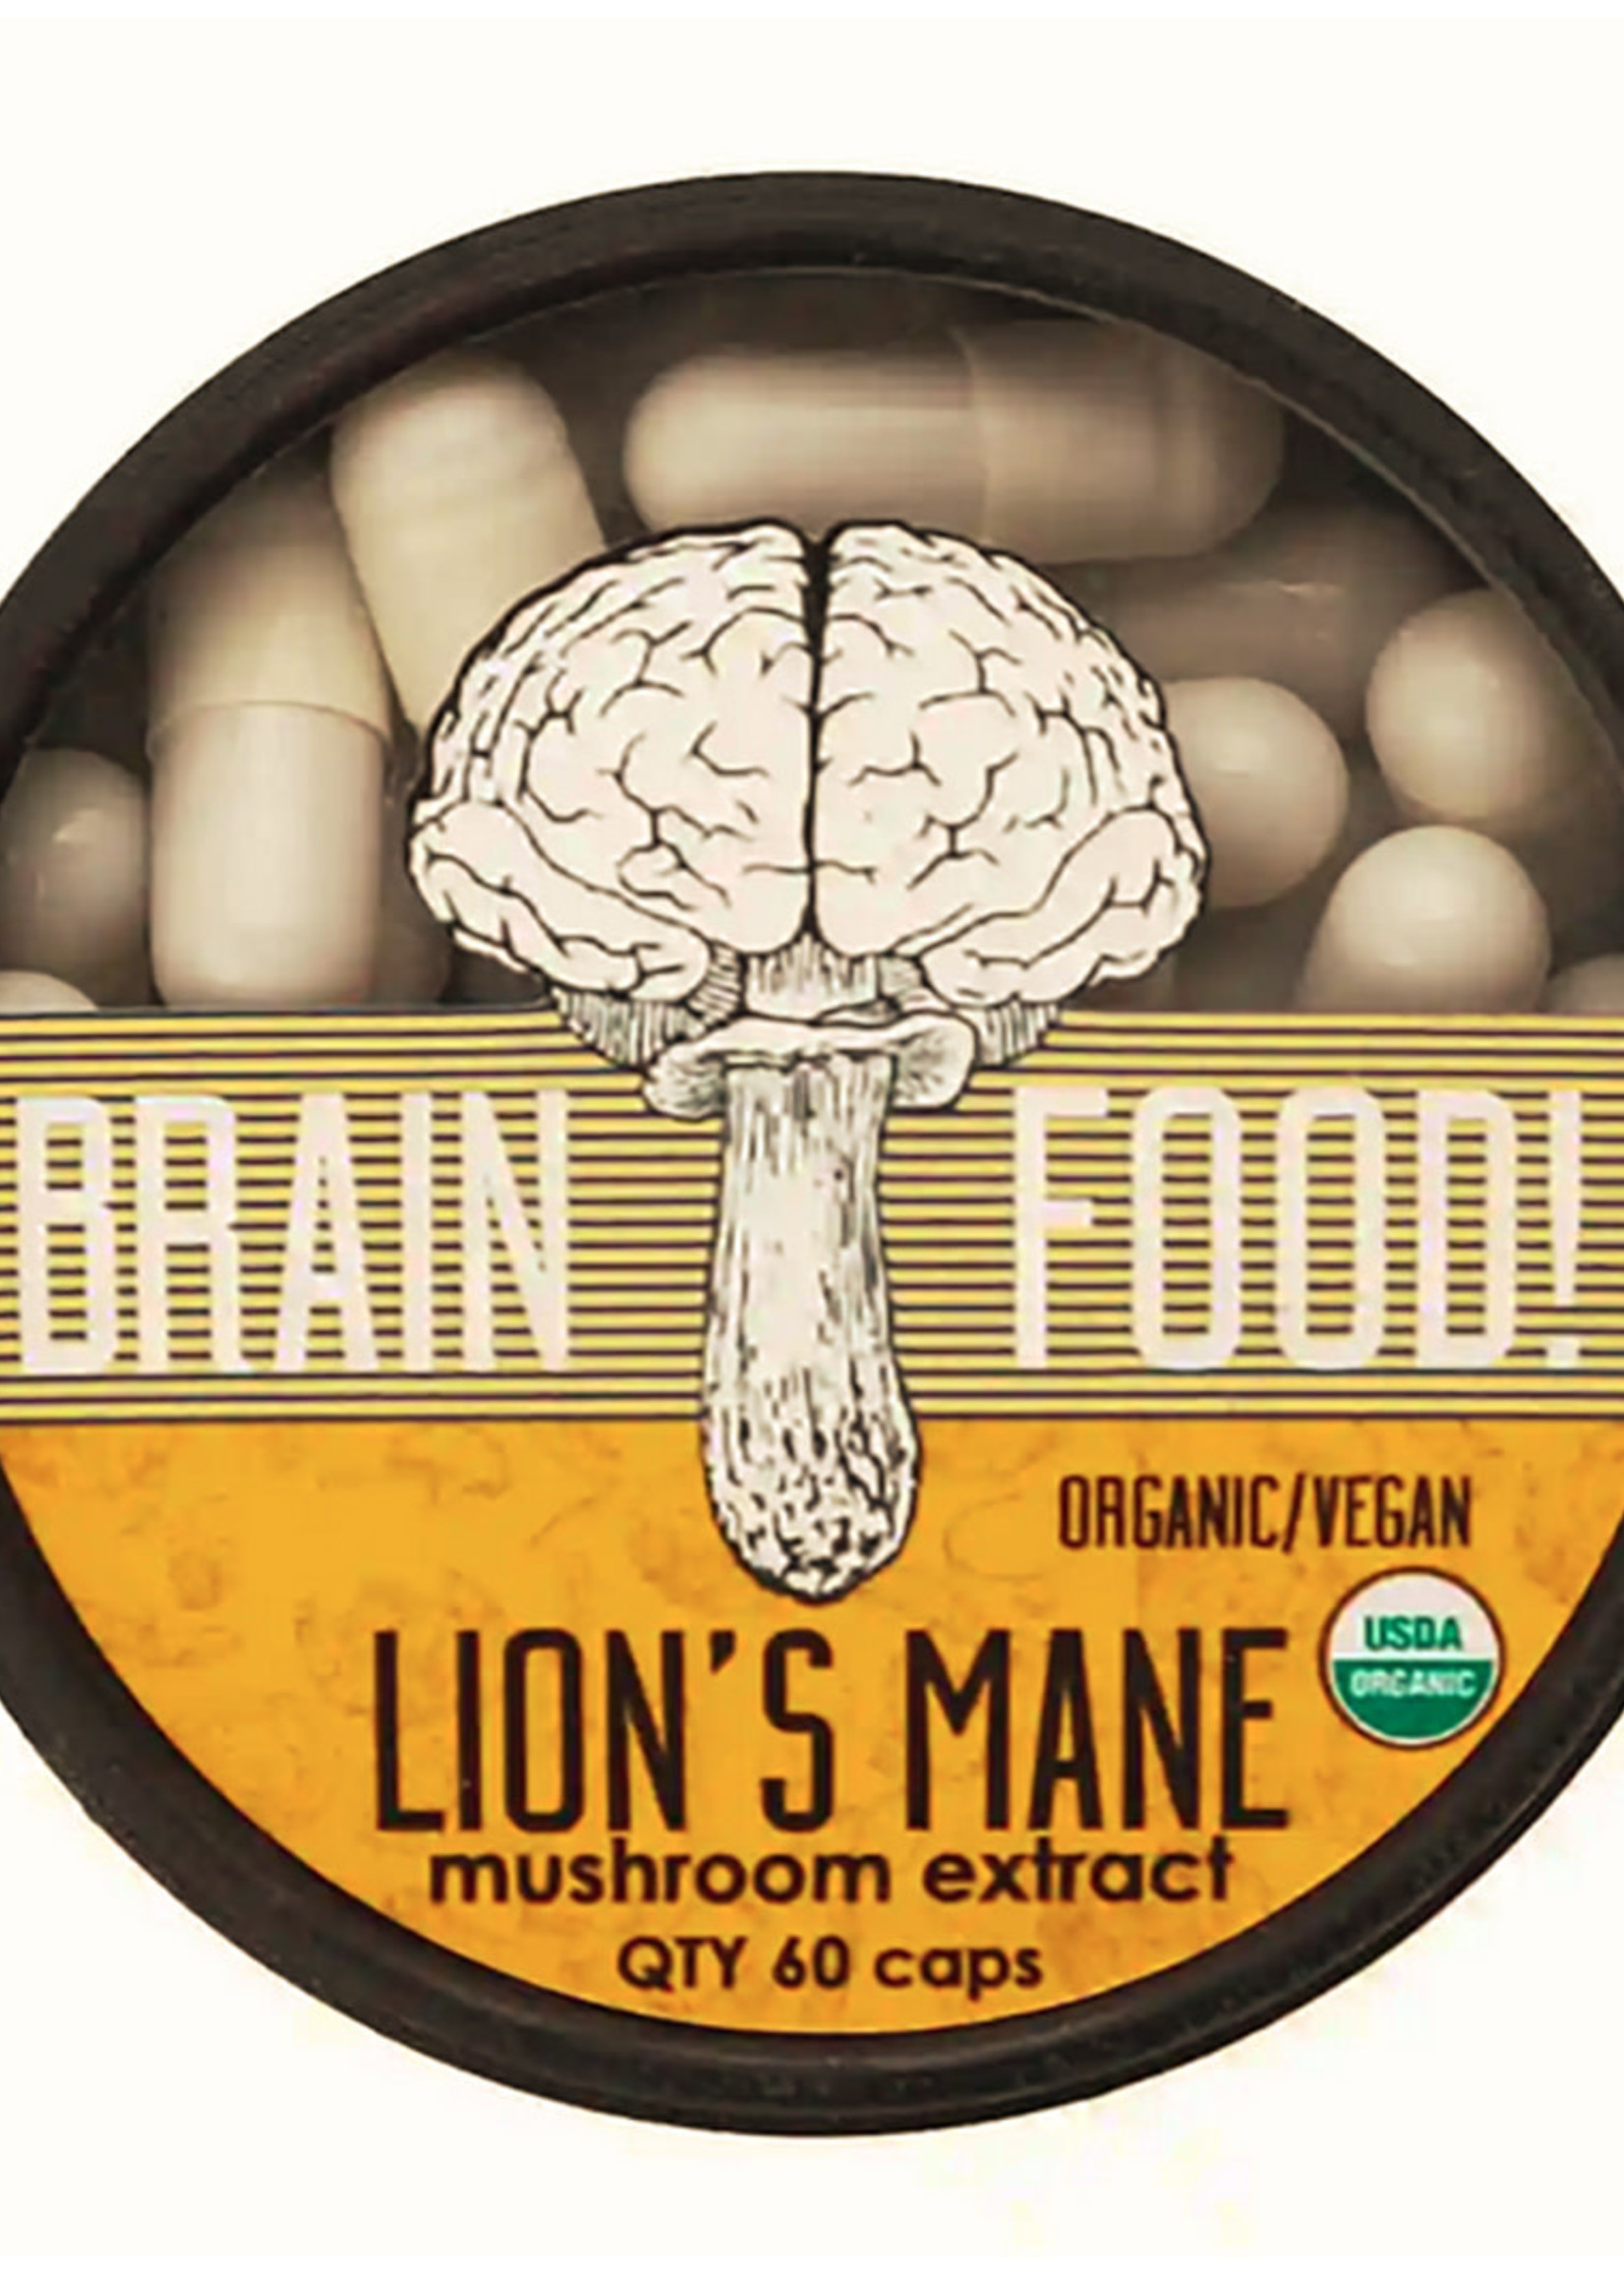 The Brainfood Mushroom Company The Brainfood Mushroom Company, Lion's Mane Mushroom Extract, Capsules, 60 ct